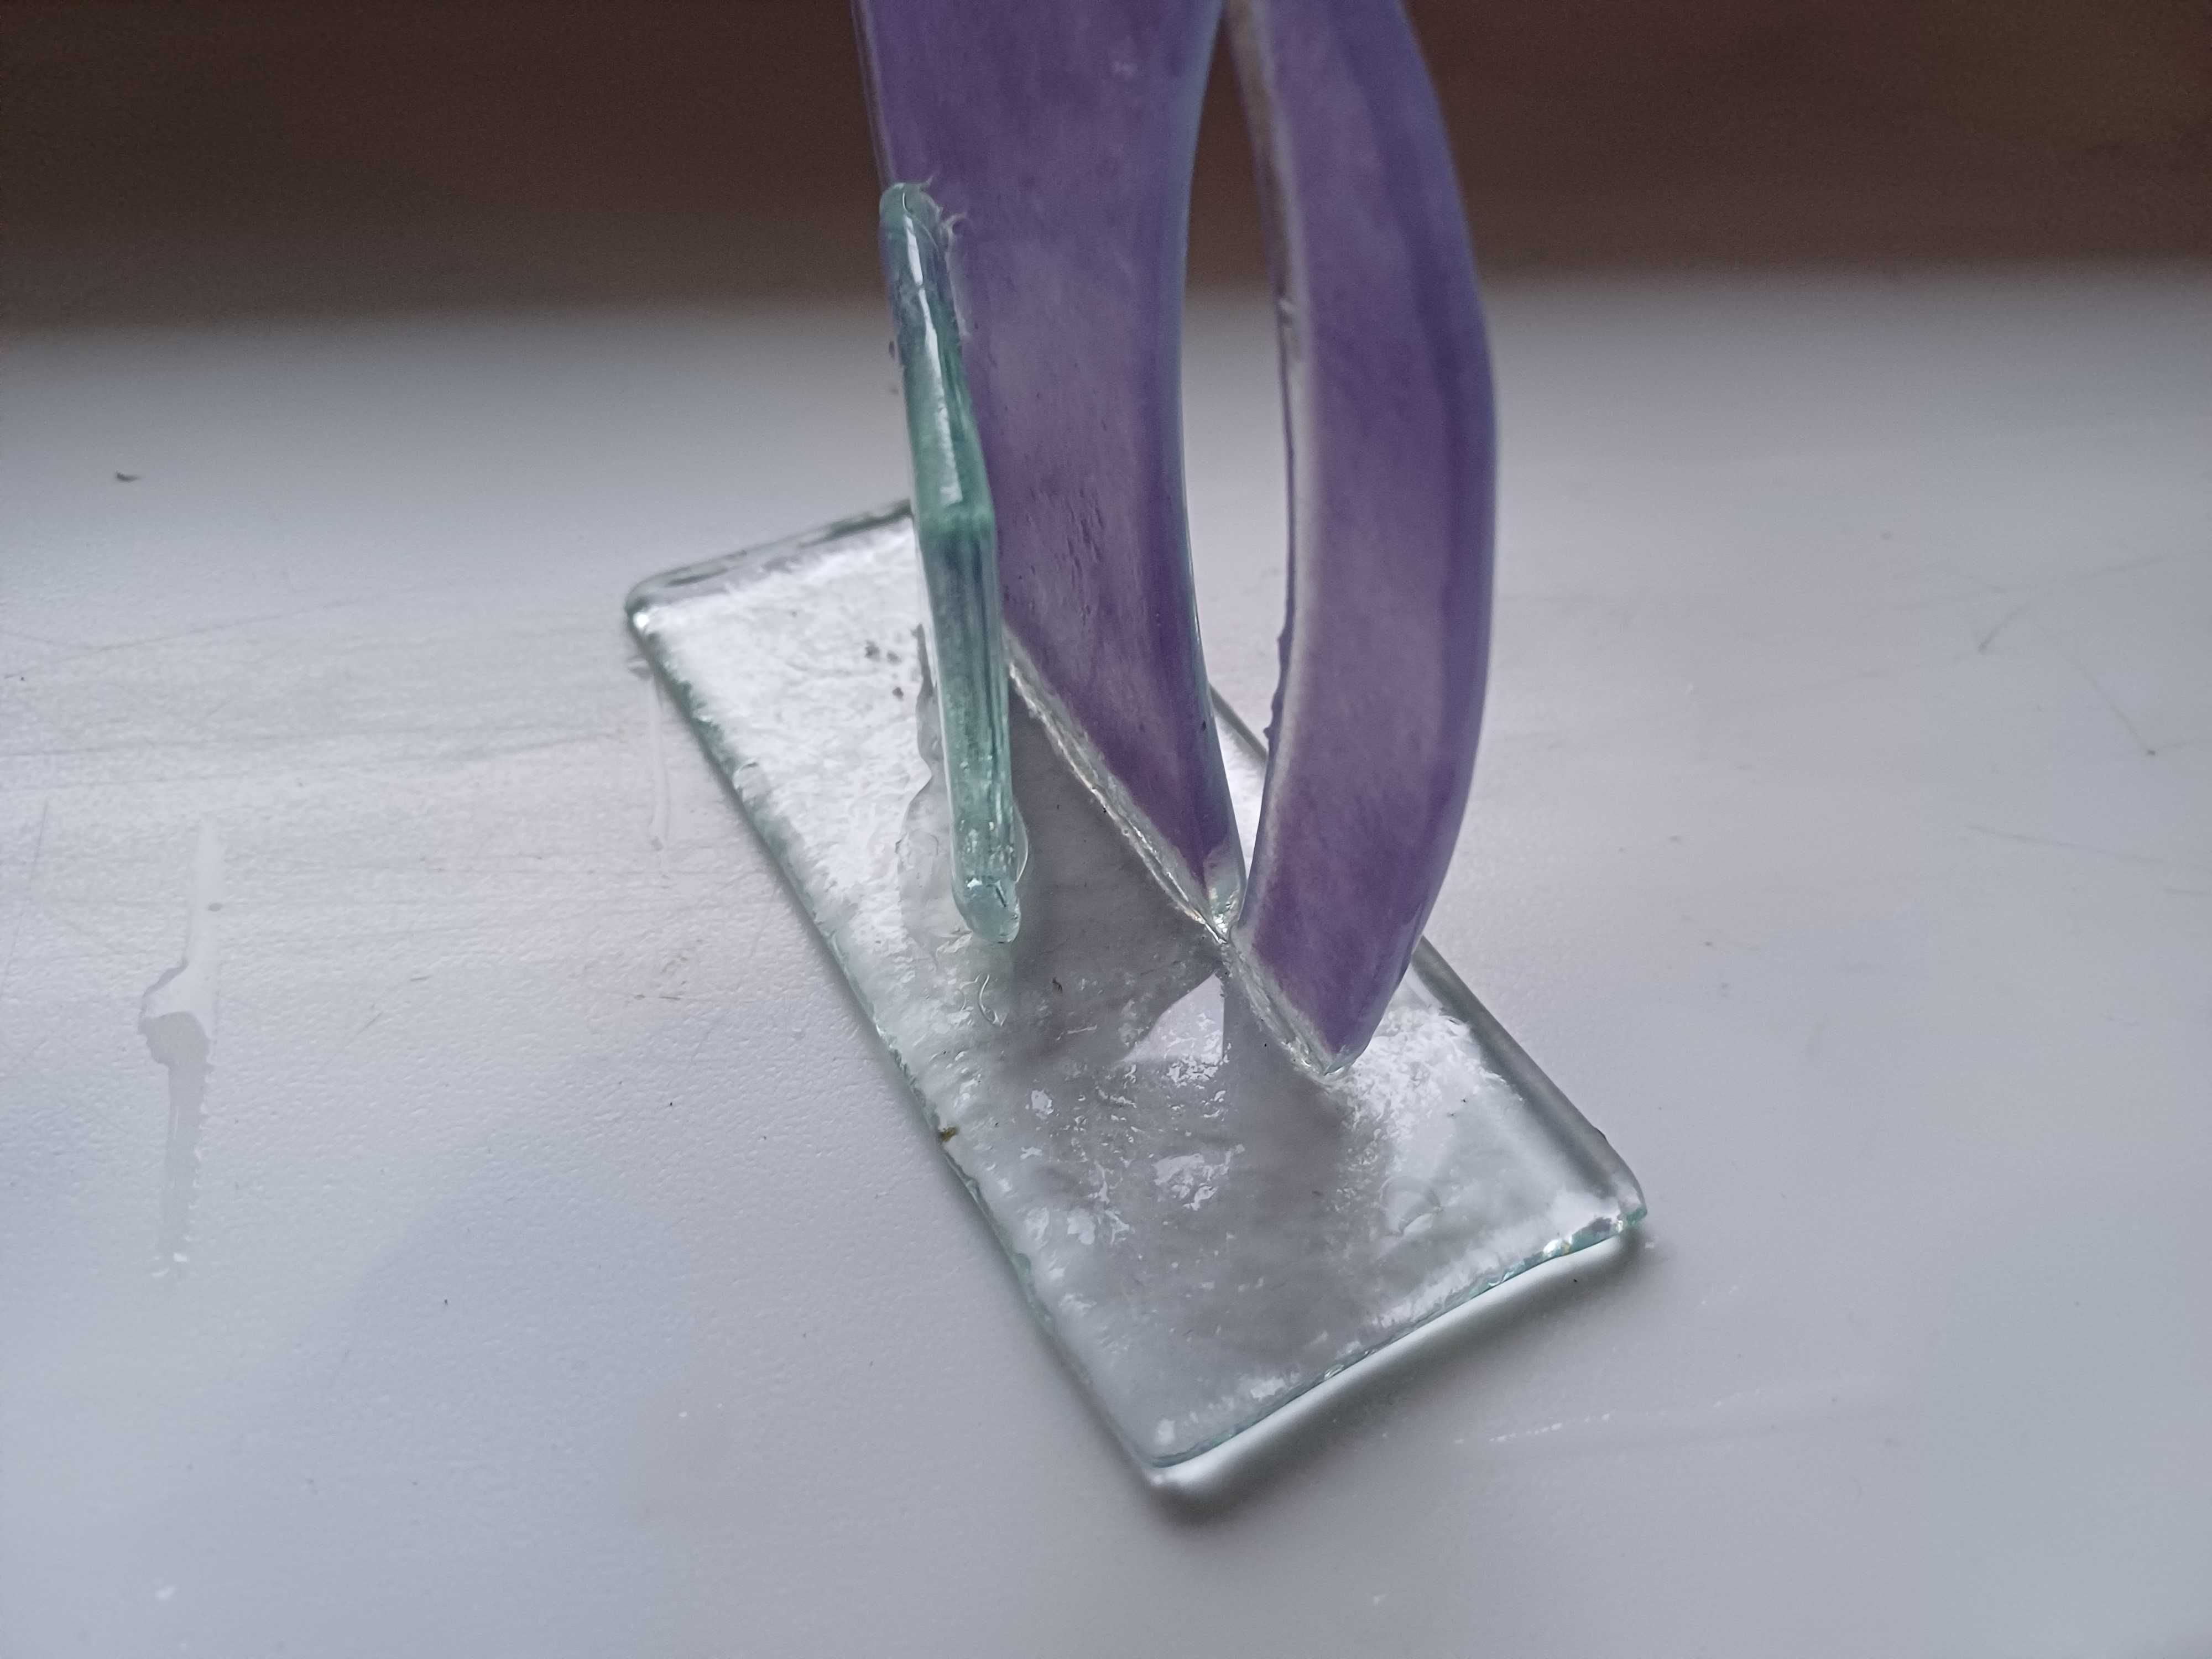 Szklana figurka kotek fioletowy